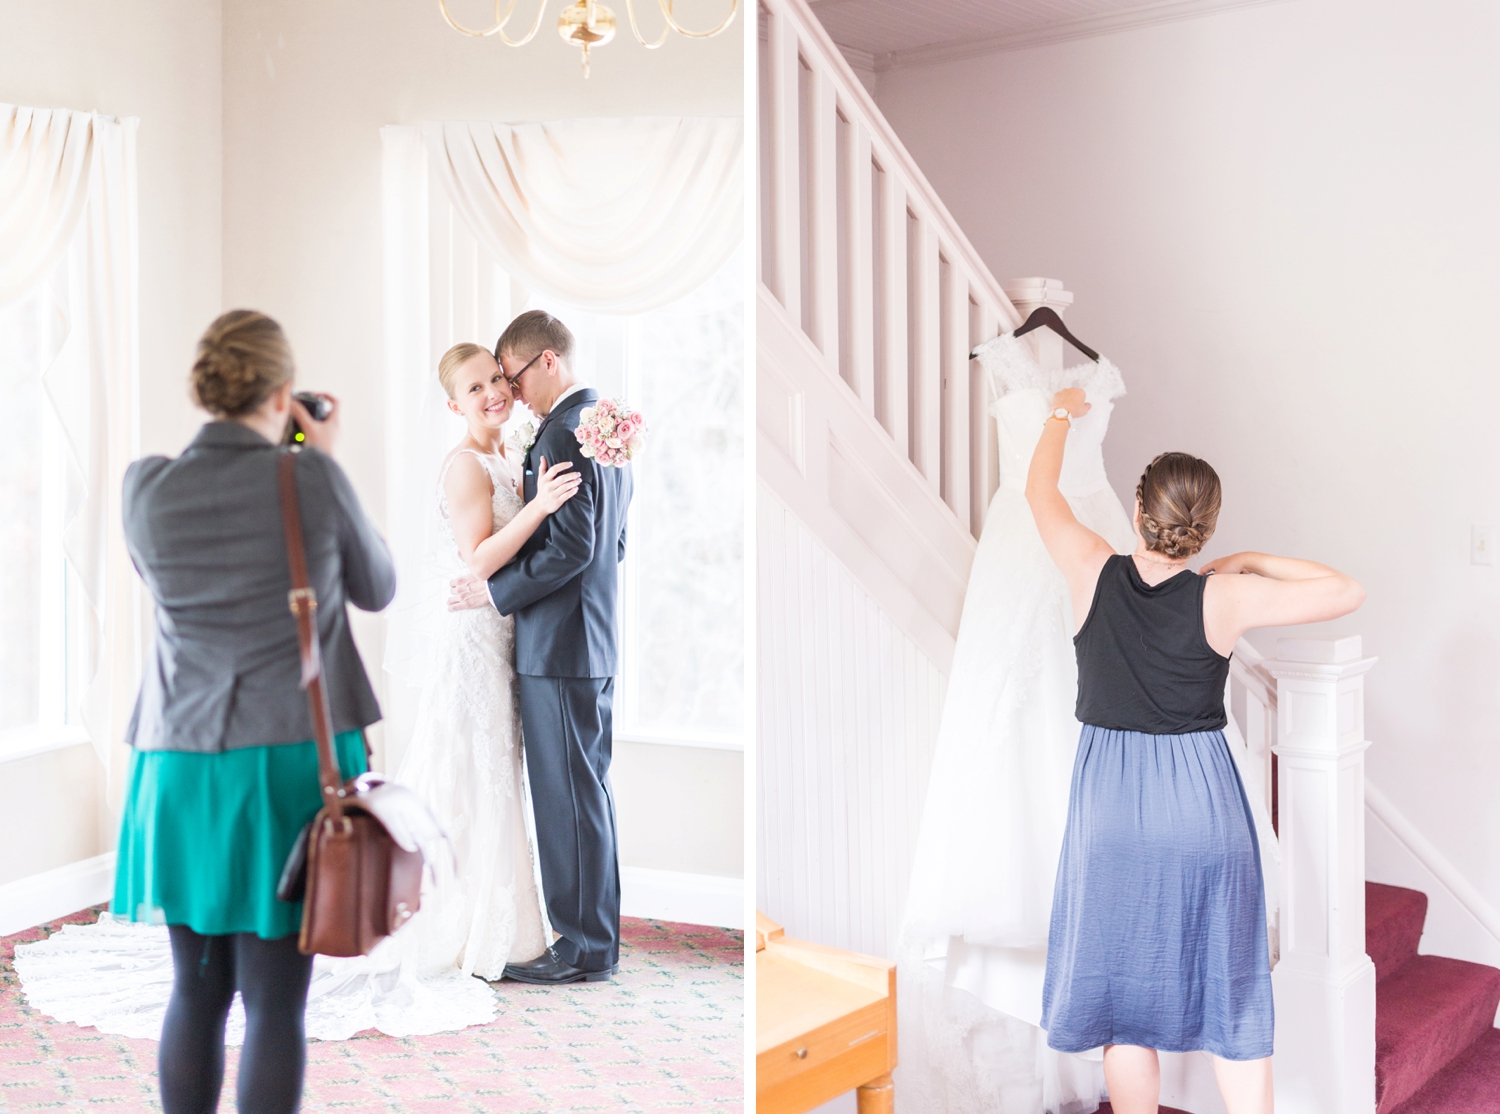 behind-the-scenes-of-a-wedding-photographer-stephanie-brann-photography_0128